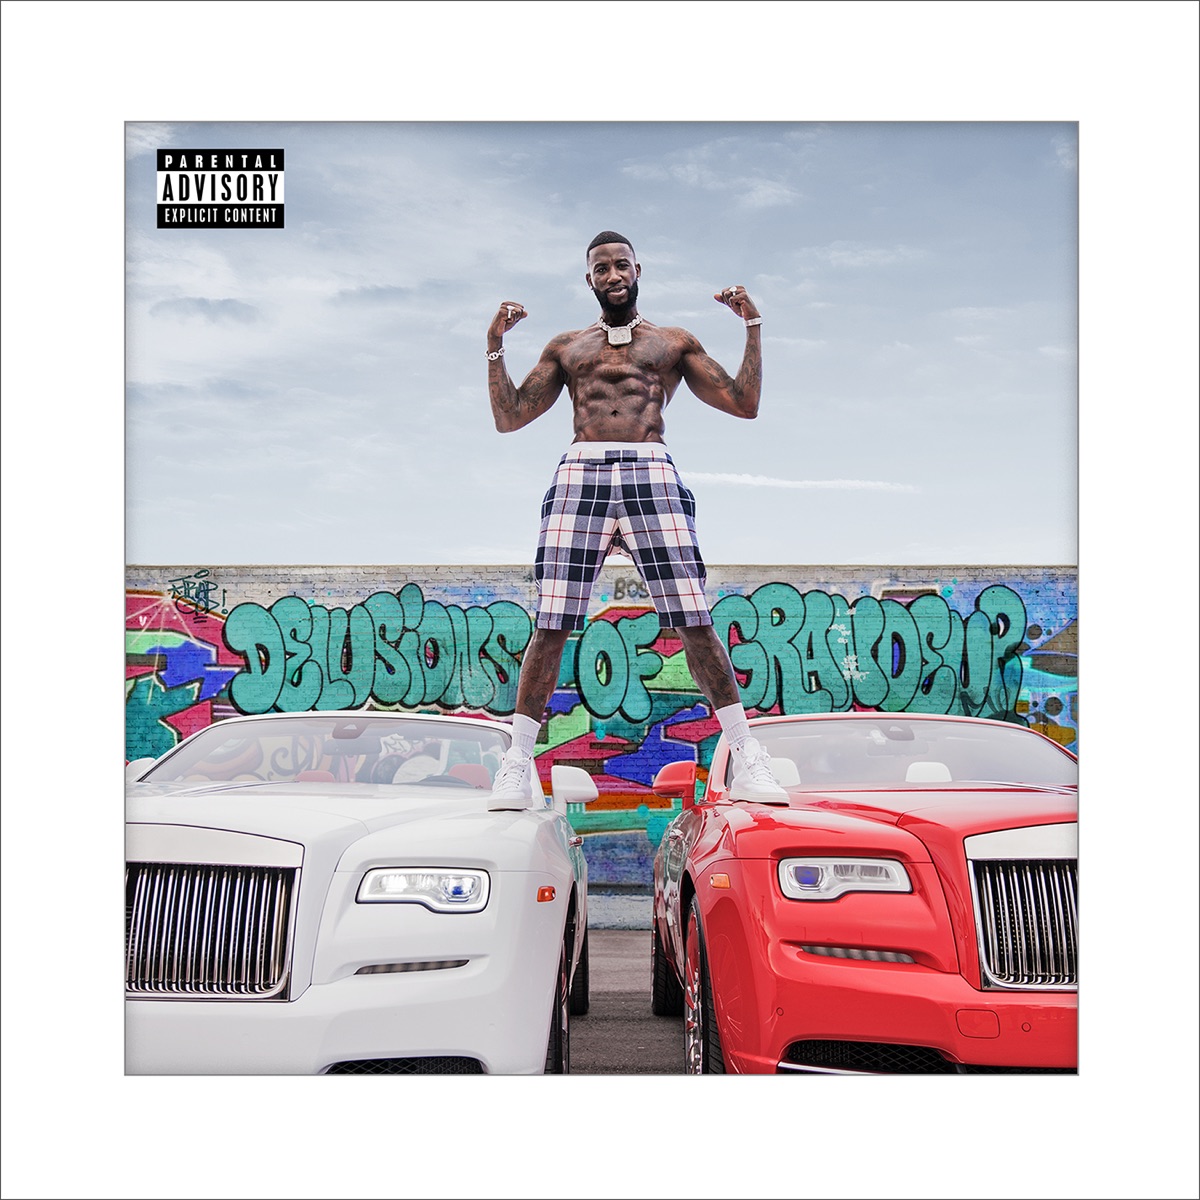 Woptober II - Album by Gucci Mane - Apple Music